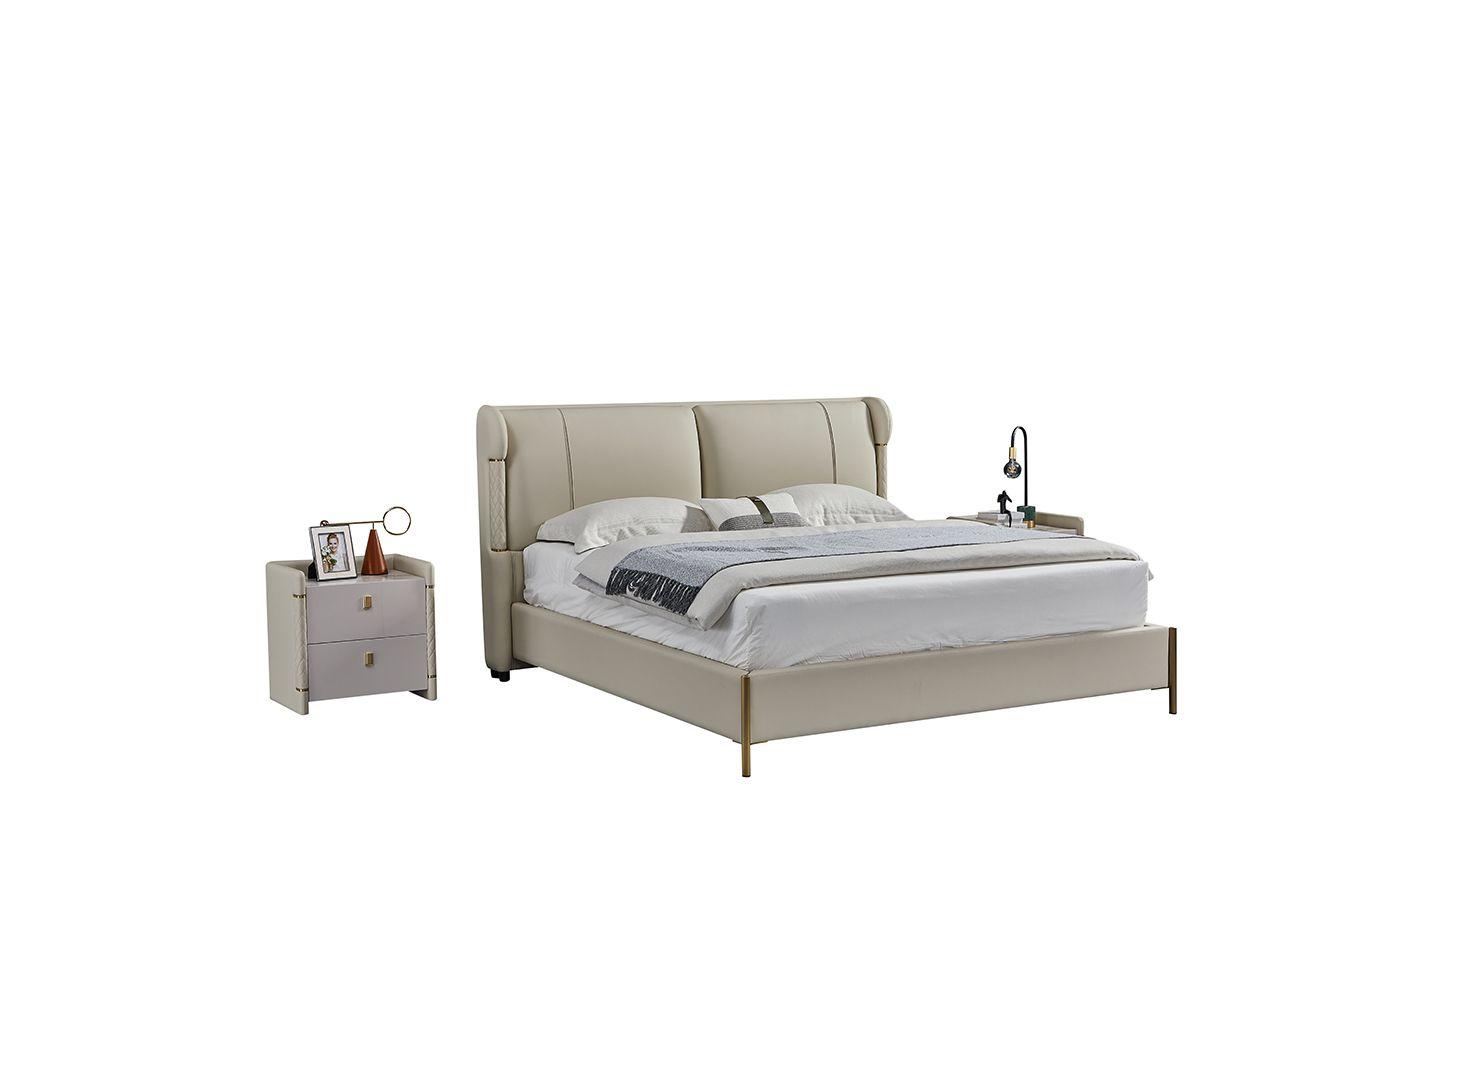 Contemporary, Modern Platform Bedroom Set B-Y2007-CK / NS-Y2007 B-Y2007-CK-3PC in Gray Genuine Leather